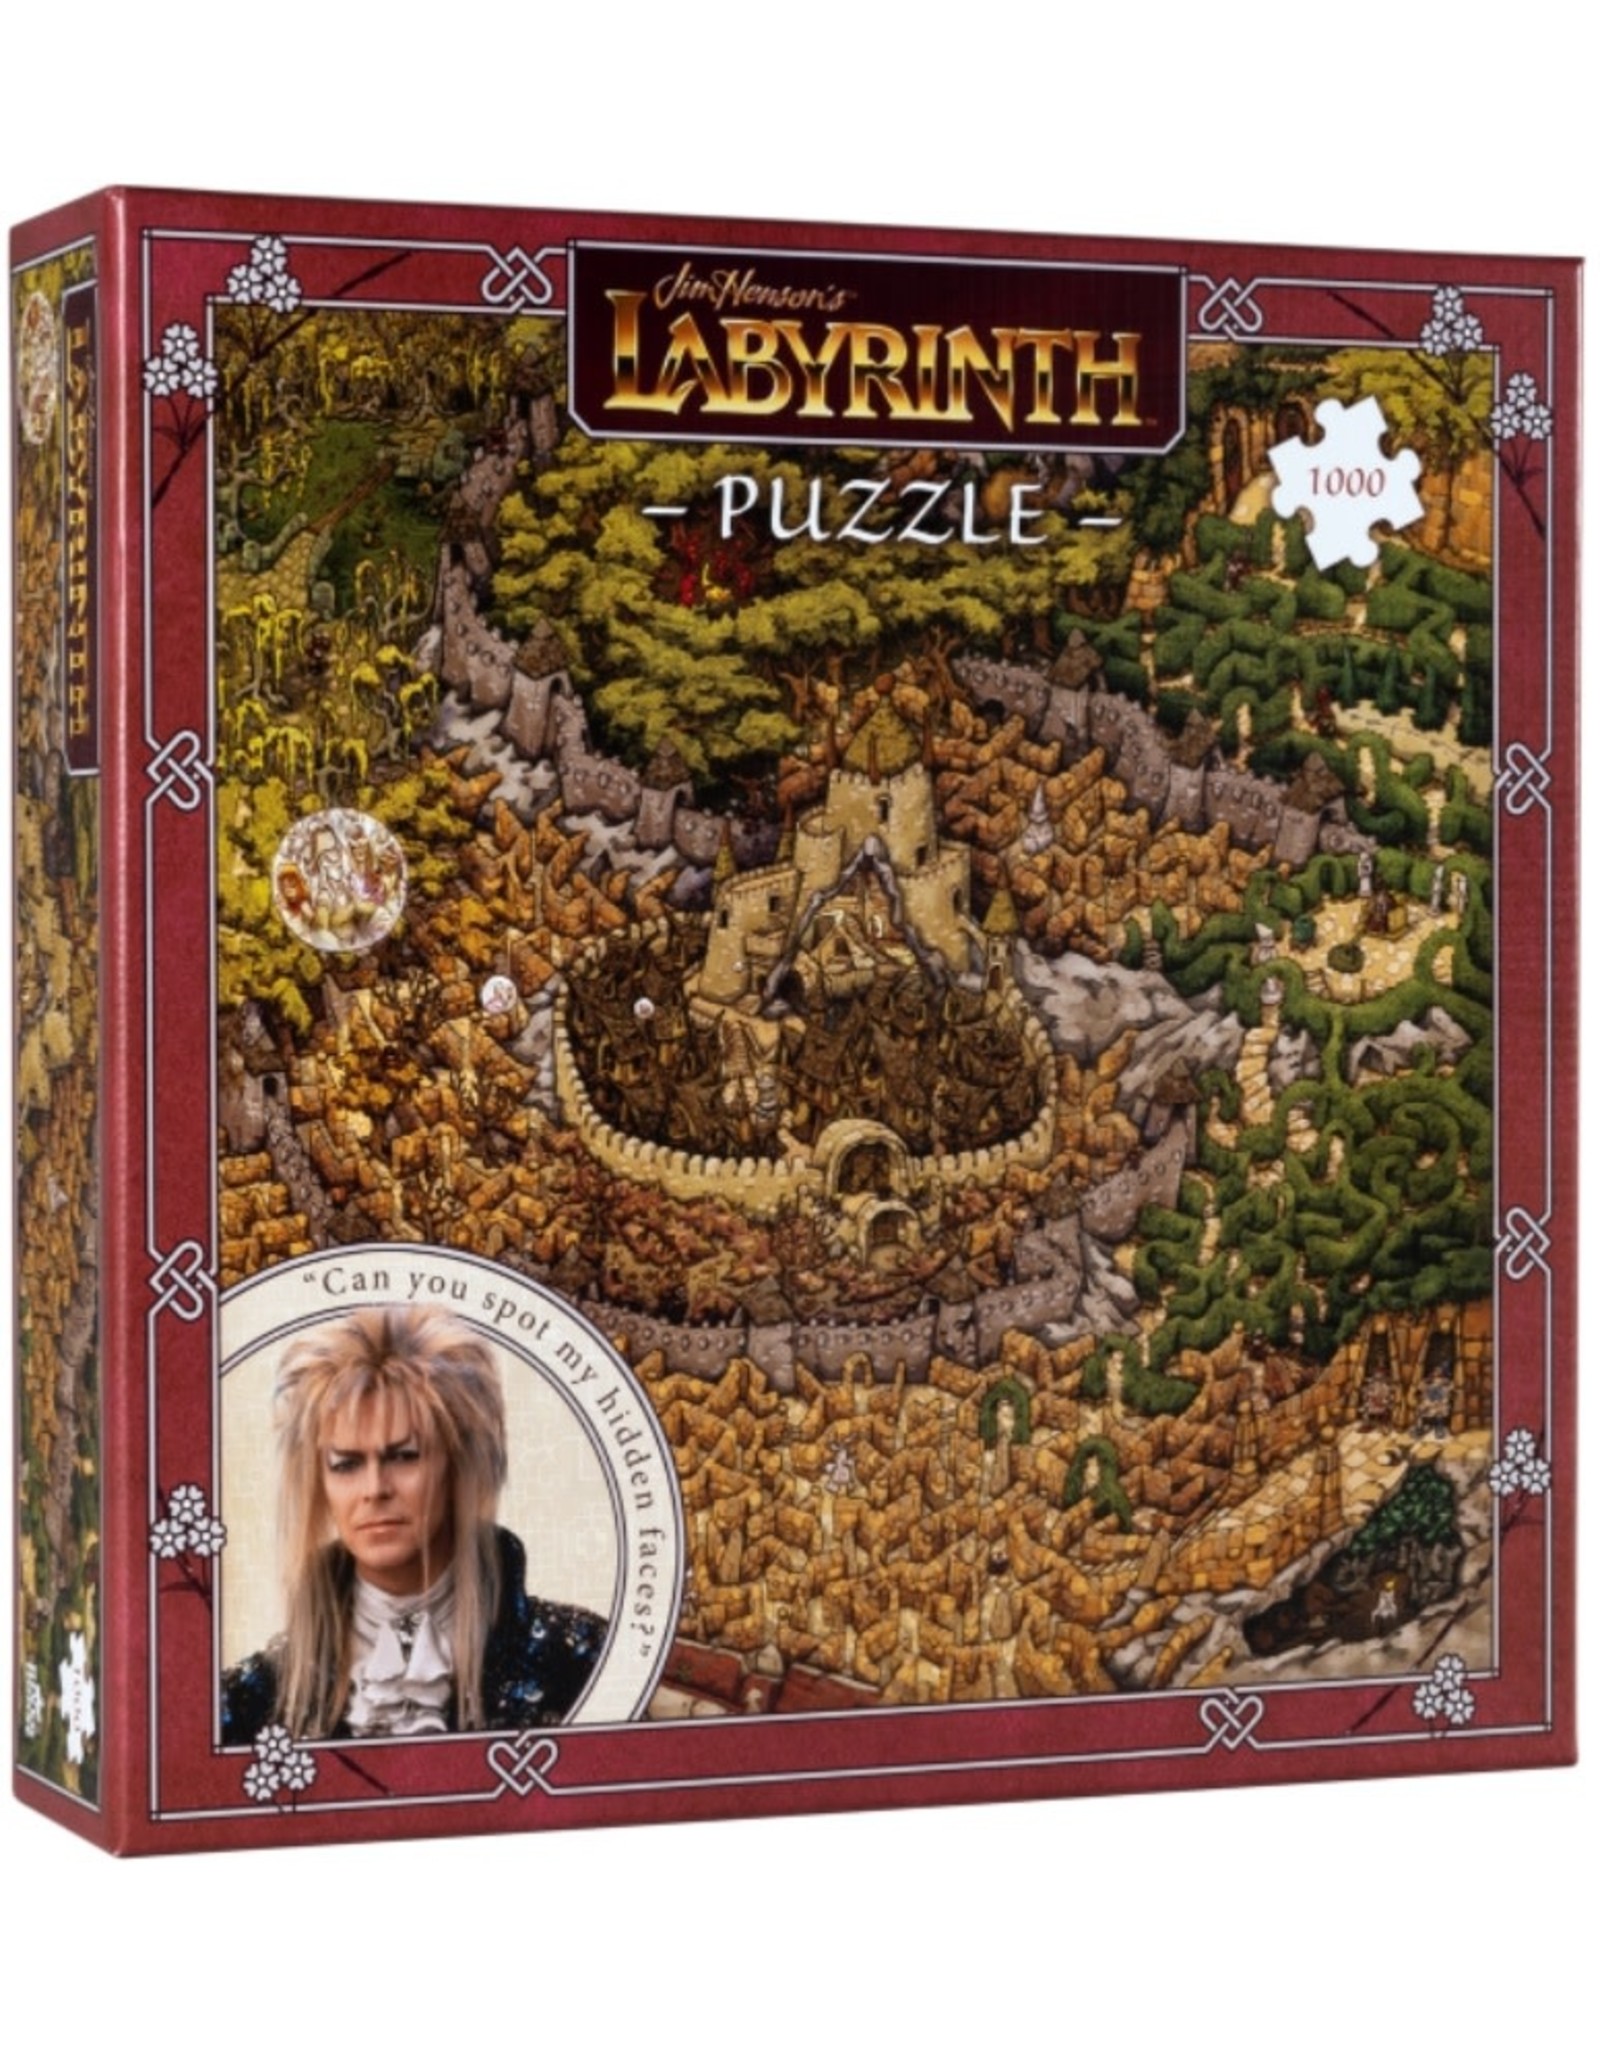 River Horse Jim Henson's Labyrinth Puzzle